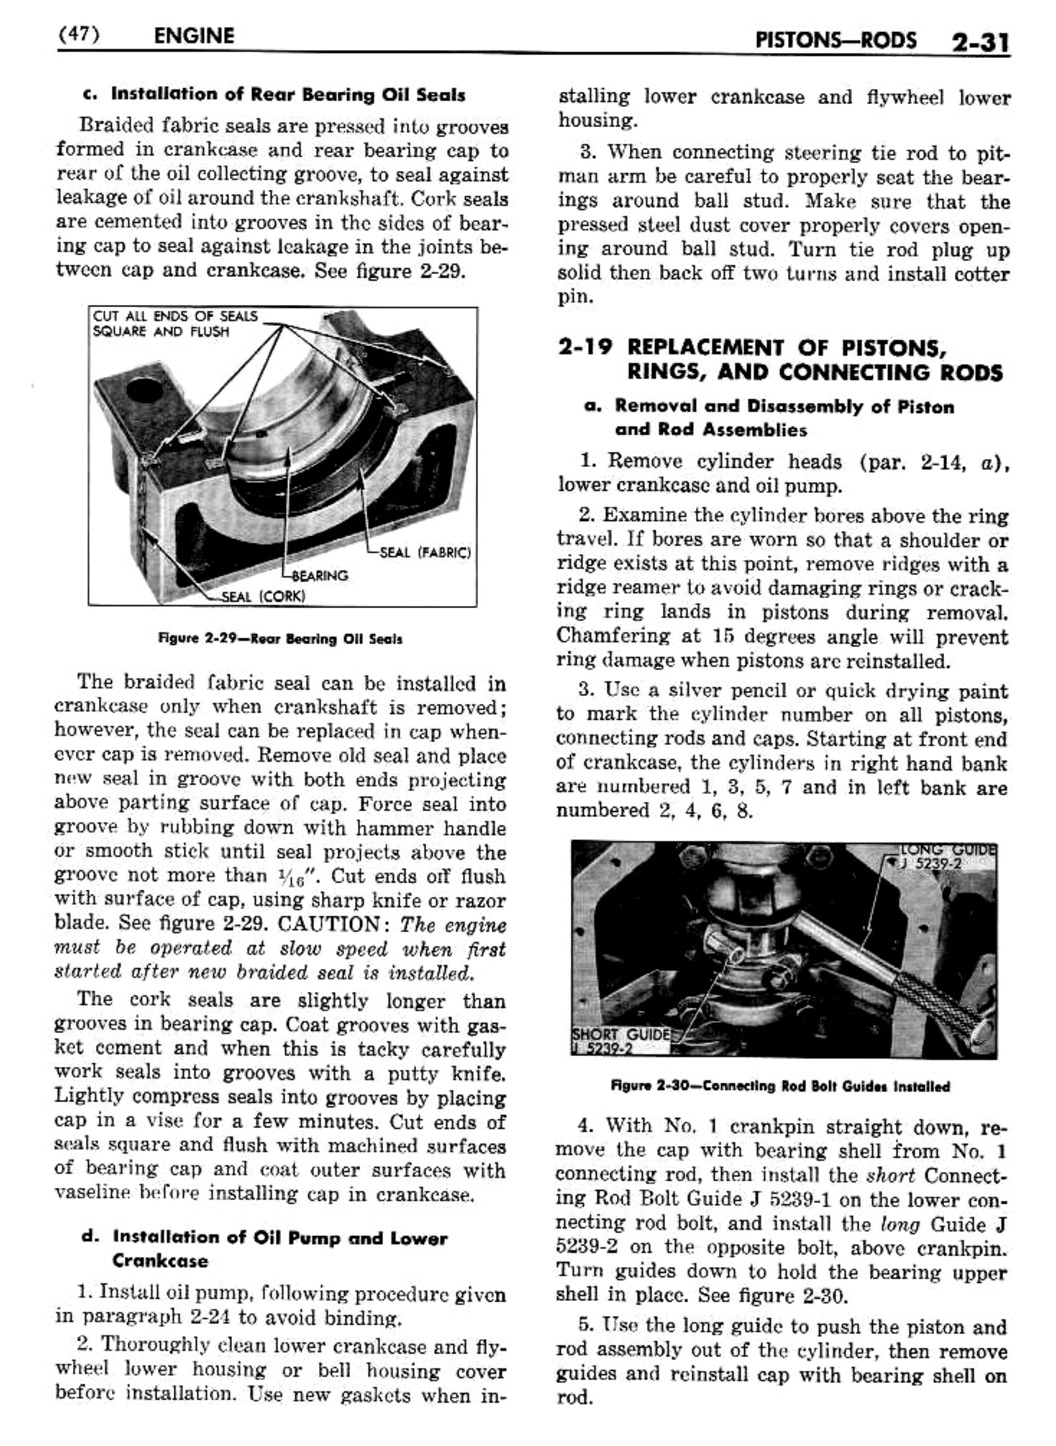 n_03 1956 Buick Shop Manual - Engine-031-031.jpg